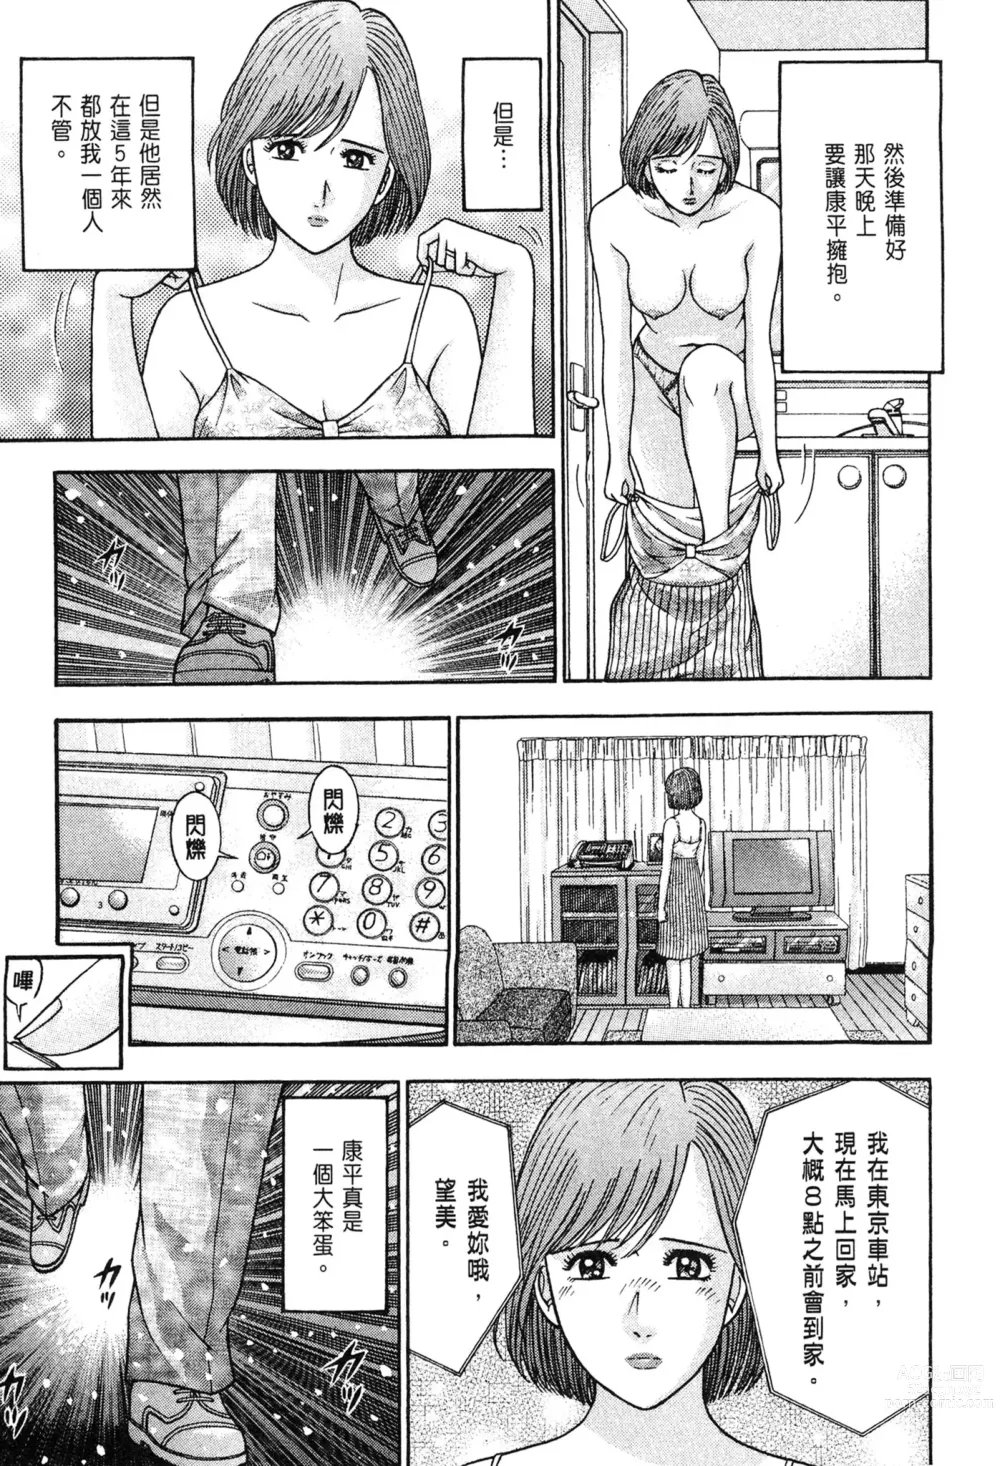 Page 187 of manga 現代美人妻圖鑑